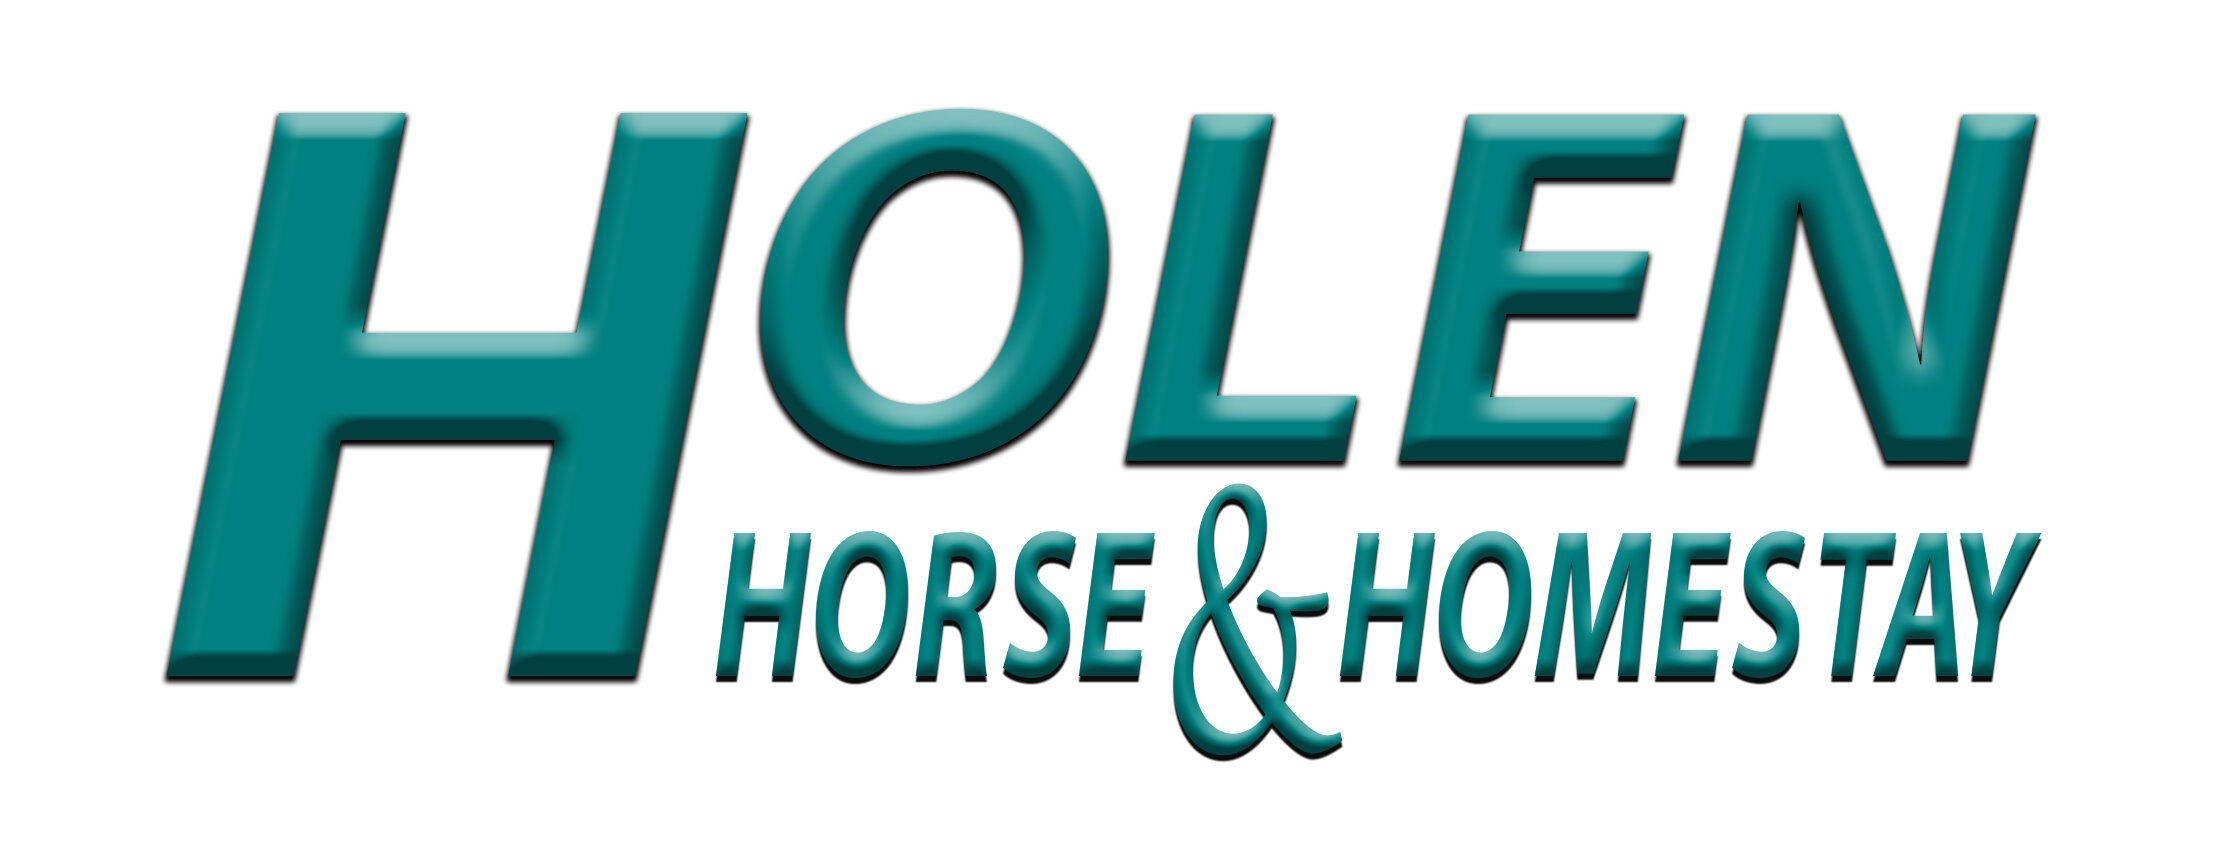 Holen Horse & Homestay